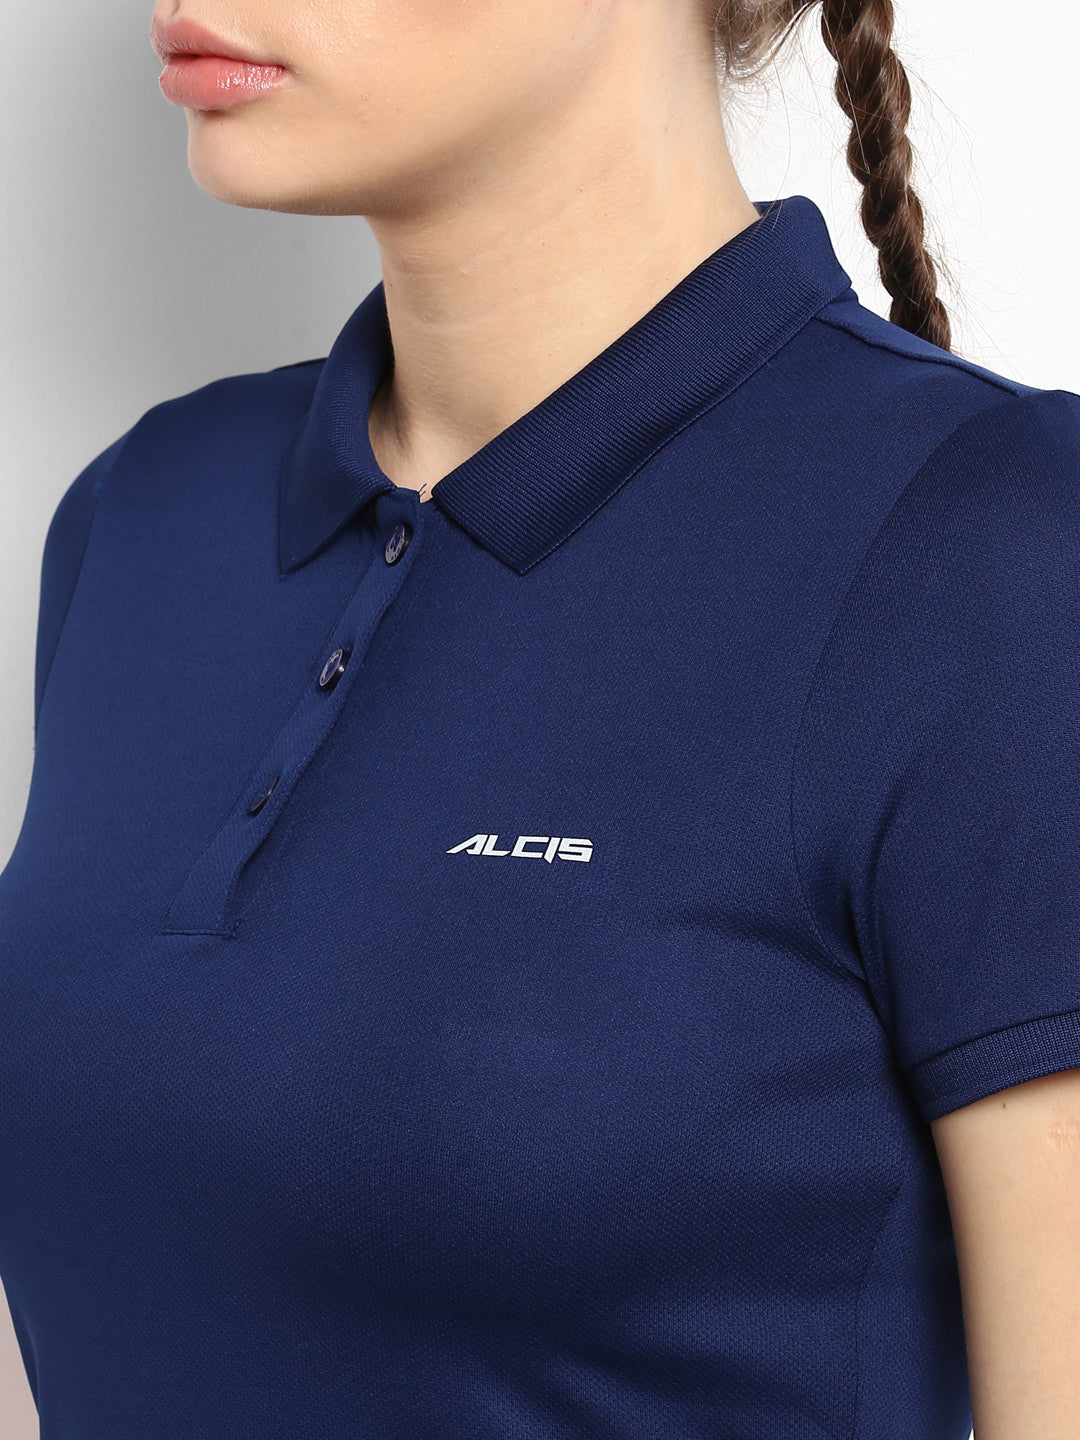 Alcis Women Solid Navy Blue Tshirts